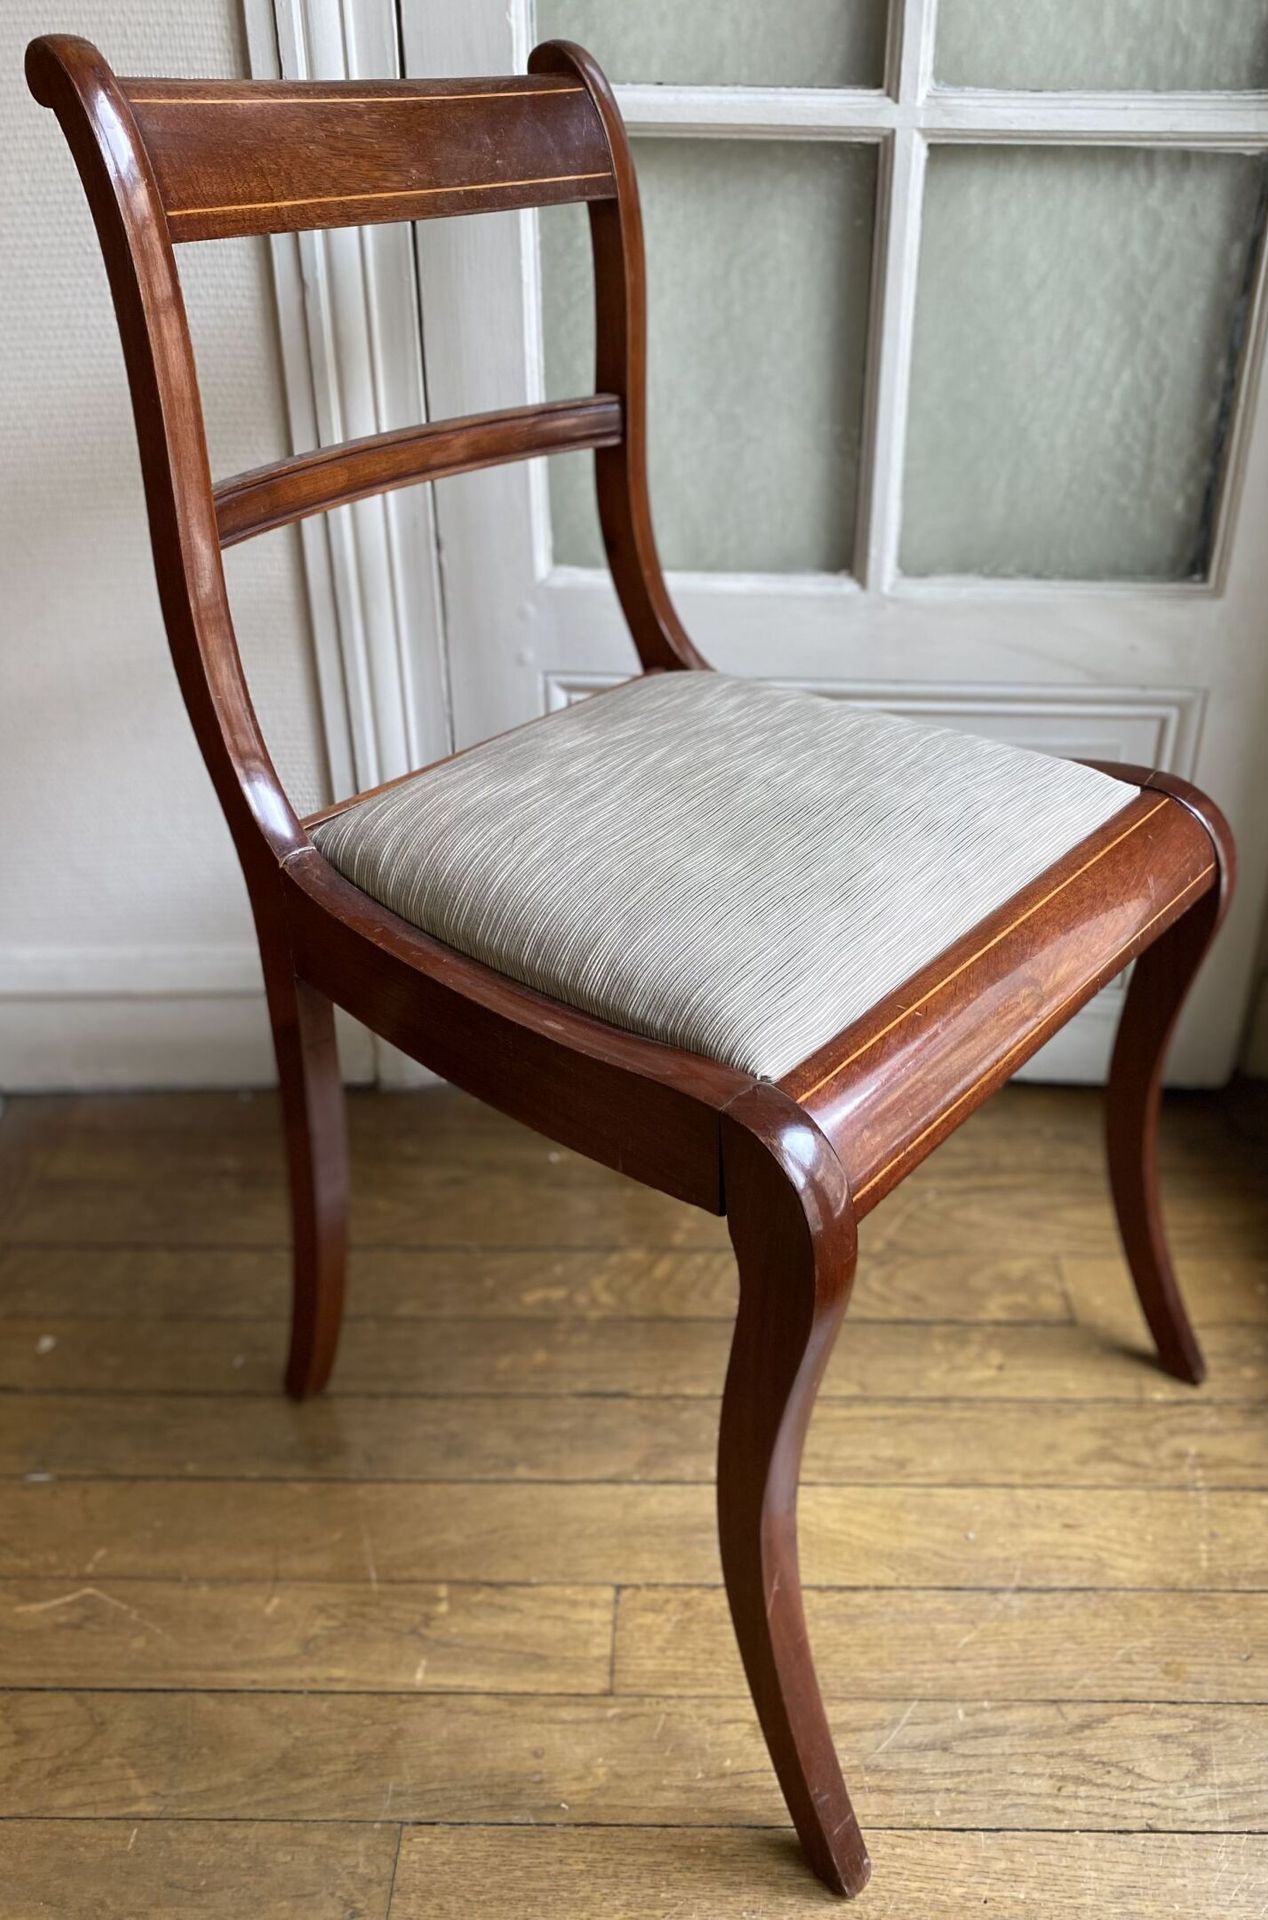 Null 一套5把桃花心木餐椅，略微卷曲的巴雷特椅背，下面有浅色的木片。前腿是拱形的，后腿是马刀形。现代工作。

尺寸：84 x 41 x 43厘米

(一些弱&hellip;